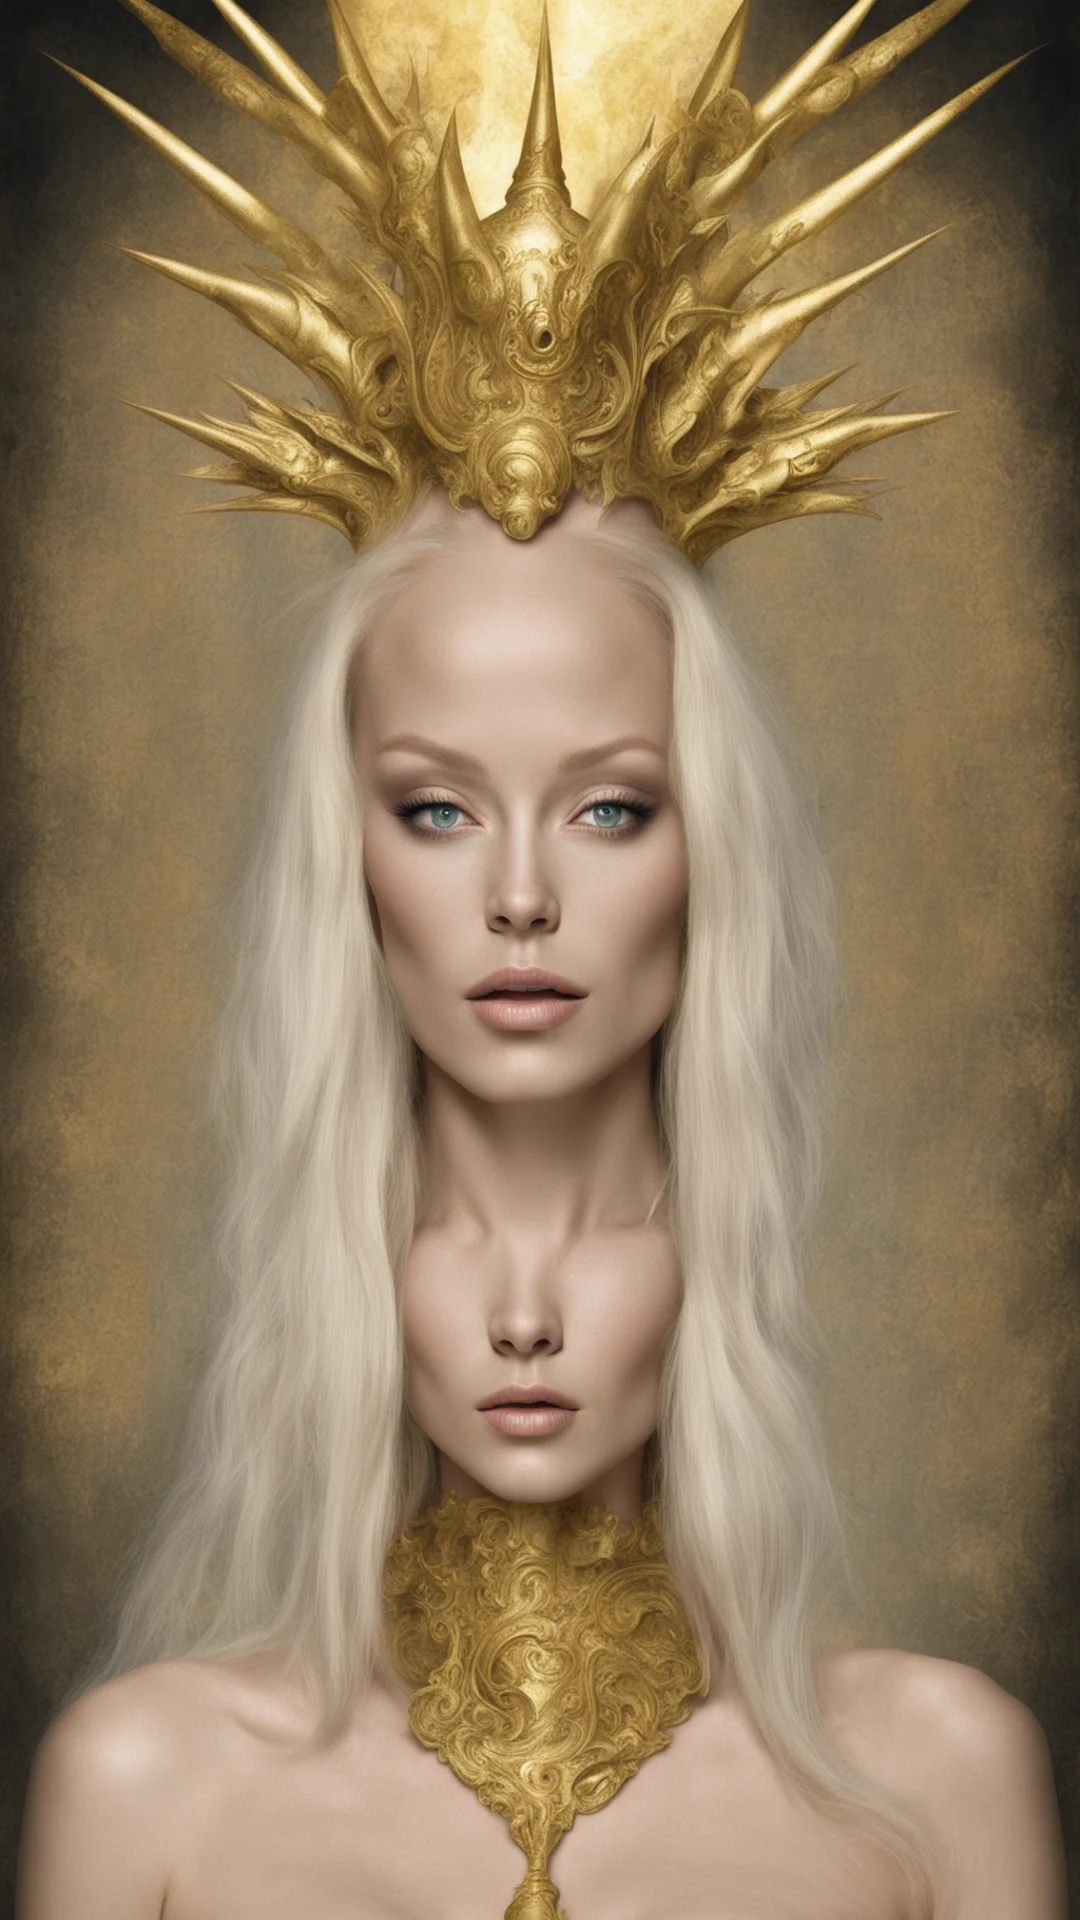 aijenna jameson as an alien queen insane resolution golden ratio sunrays cezanne amazing awesome portrait 2 tall